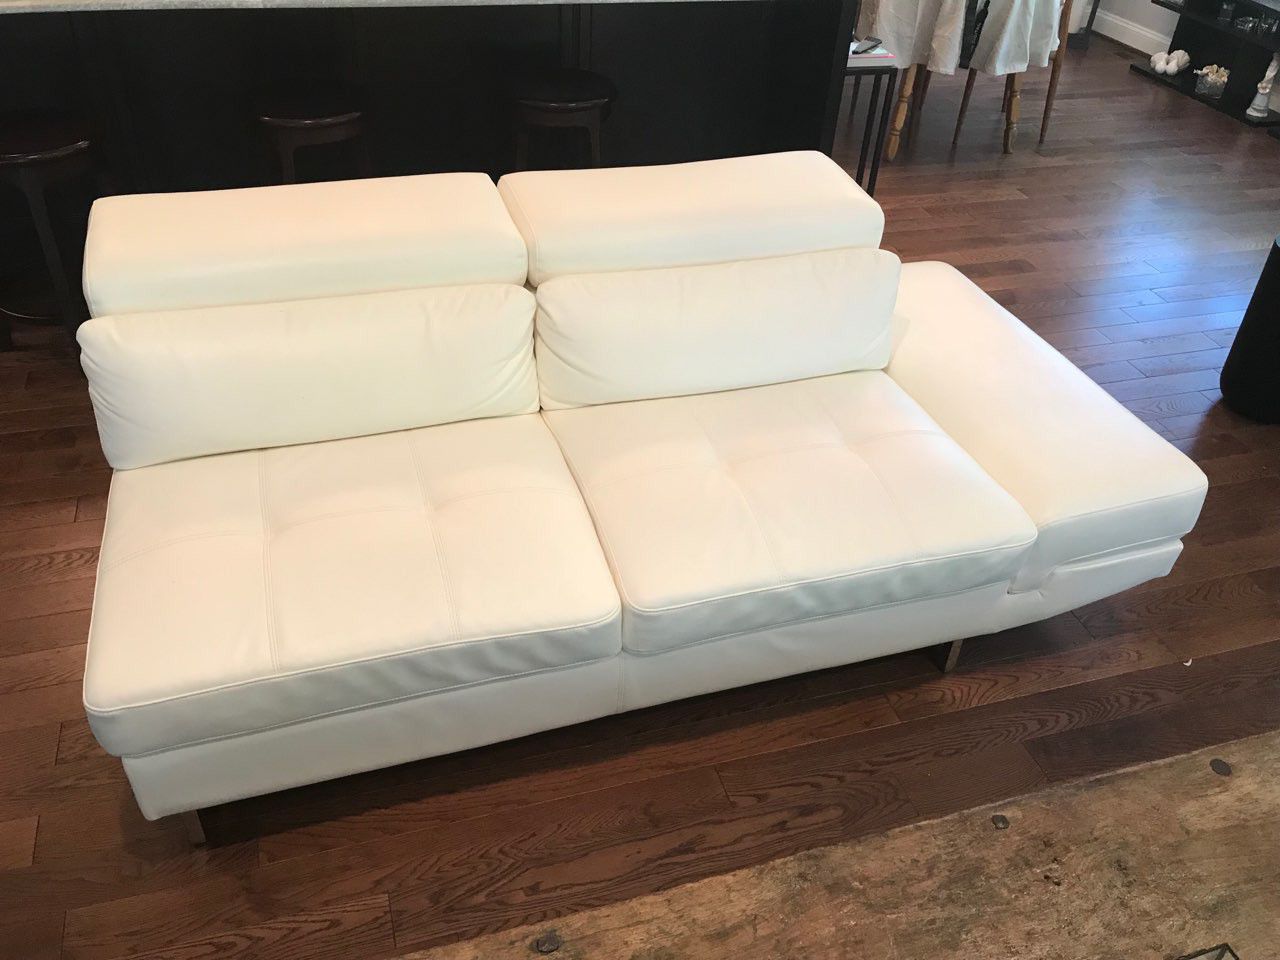 White Sectional Sofa and Ottoman